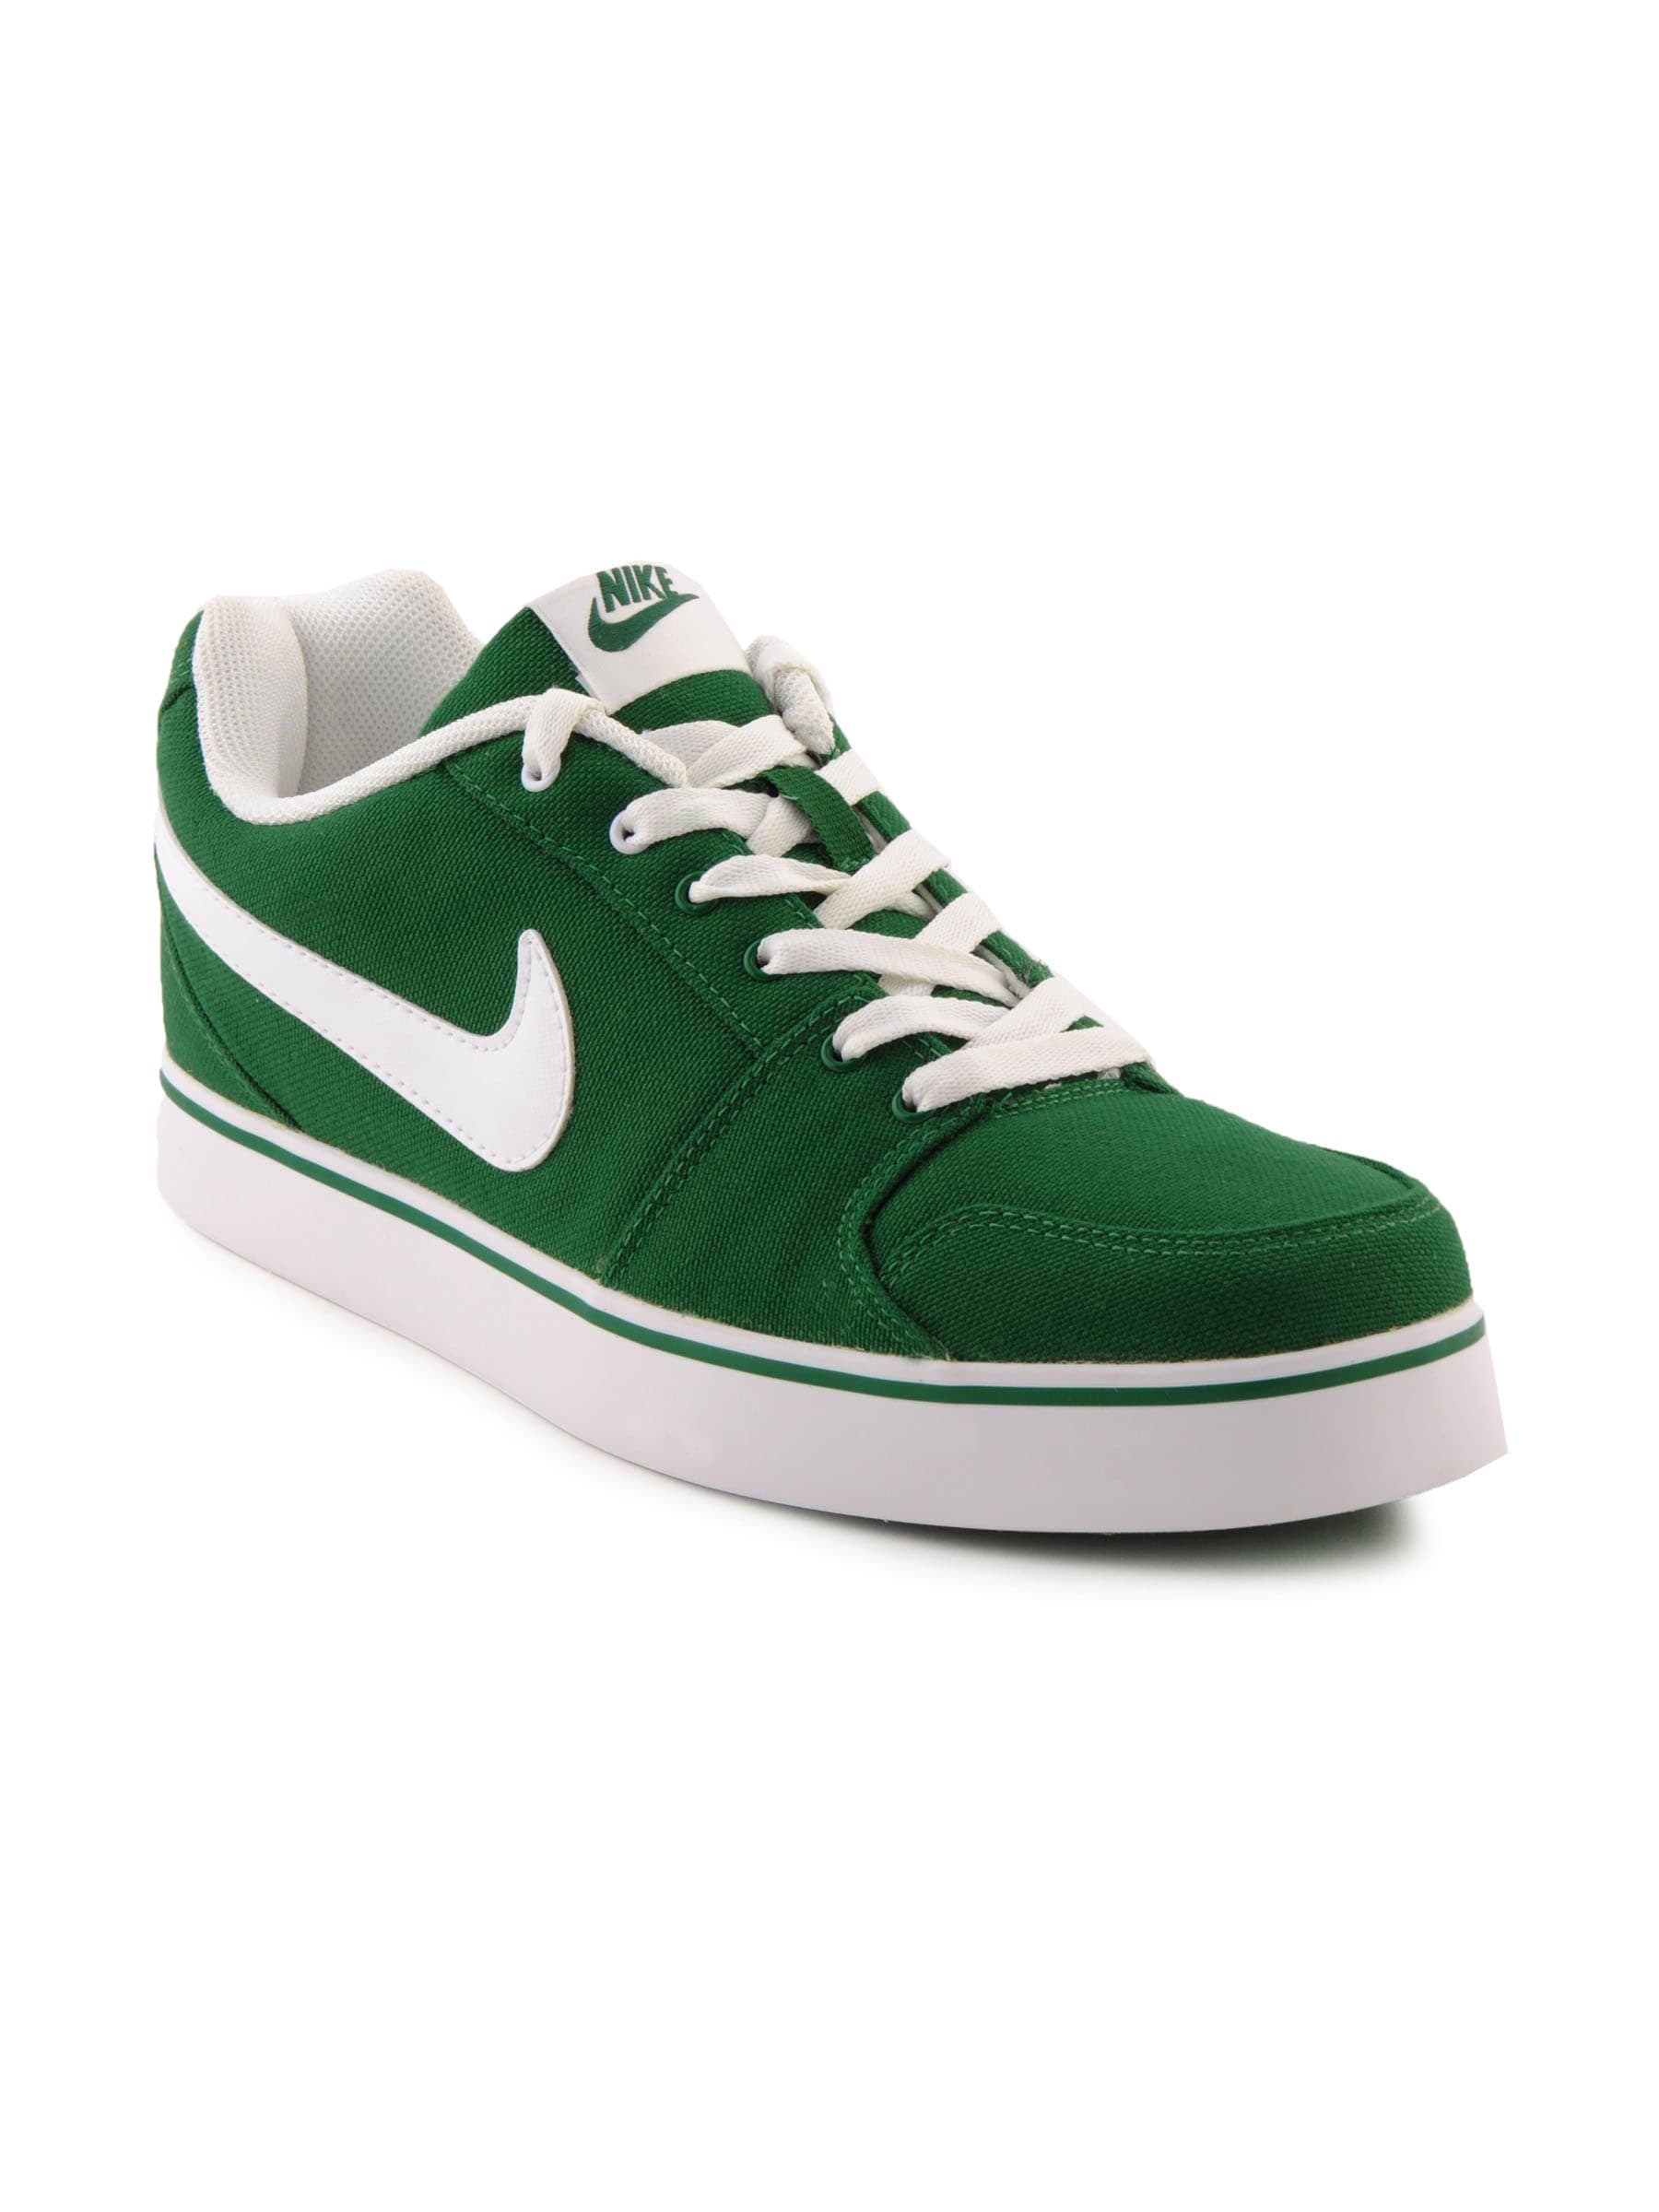 Nike Men Liteforce Green Casual Shoes